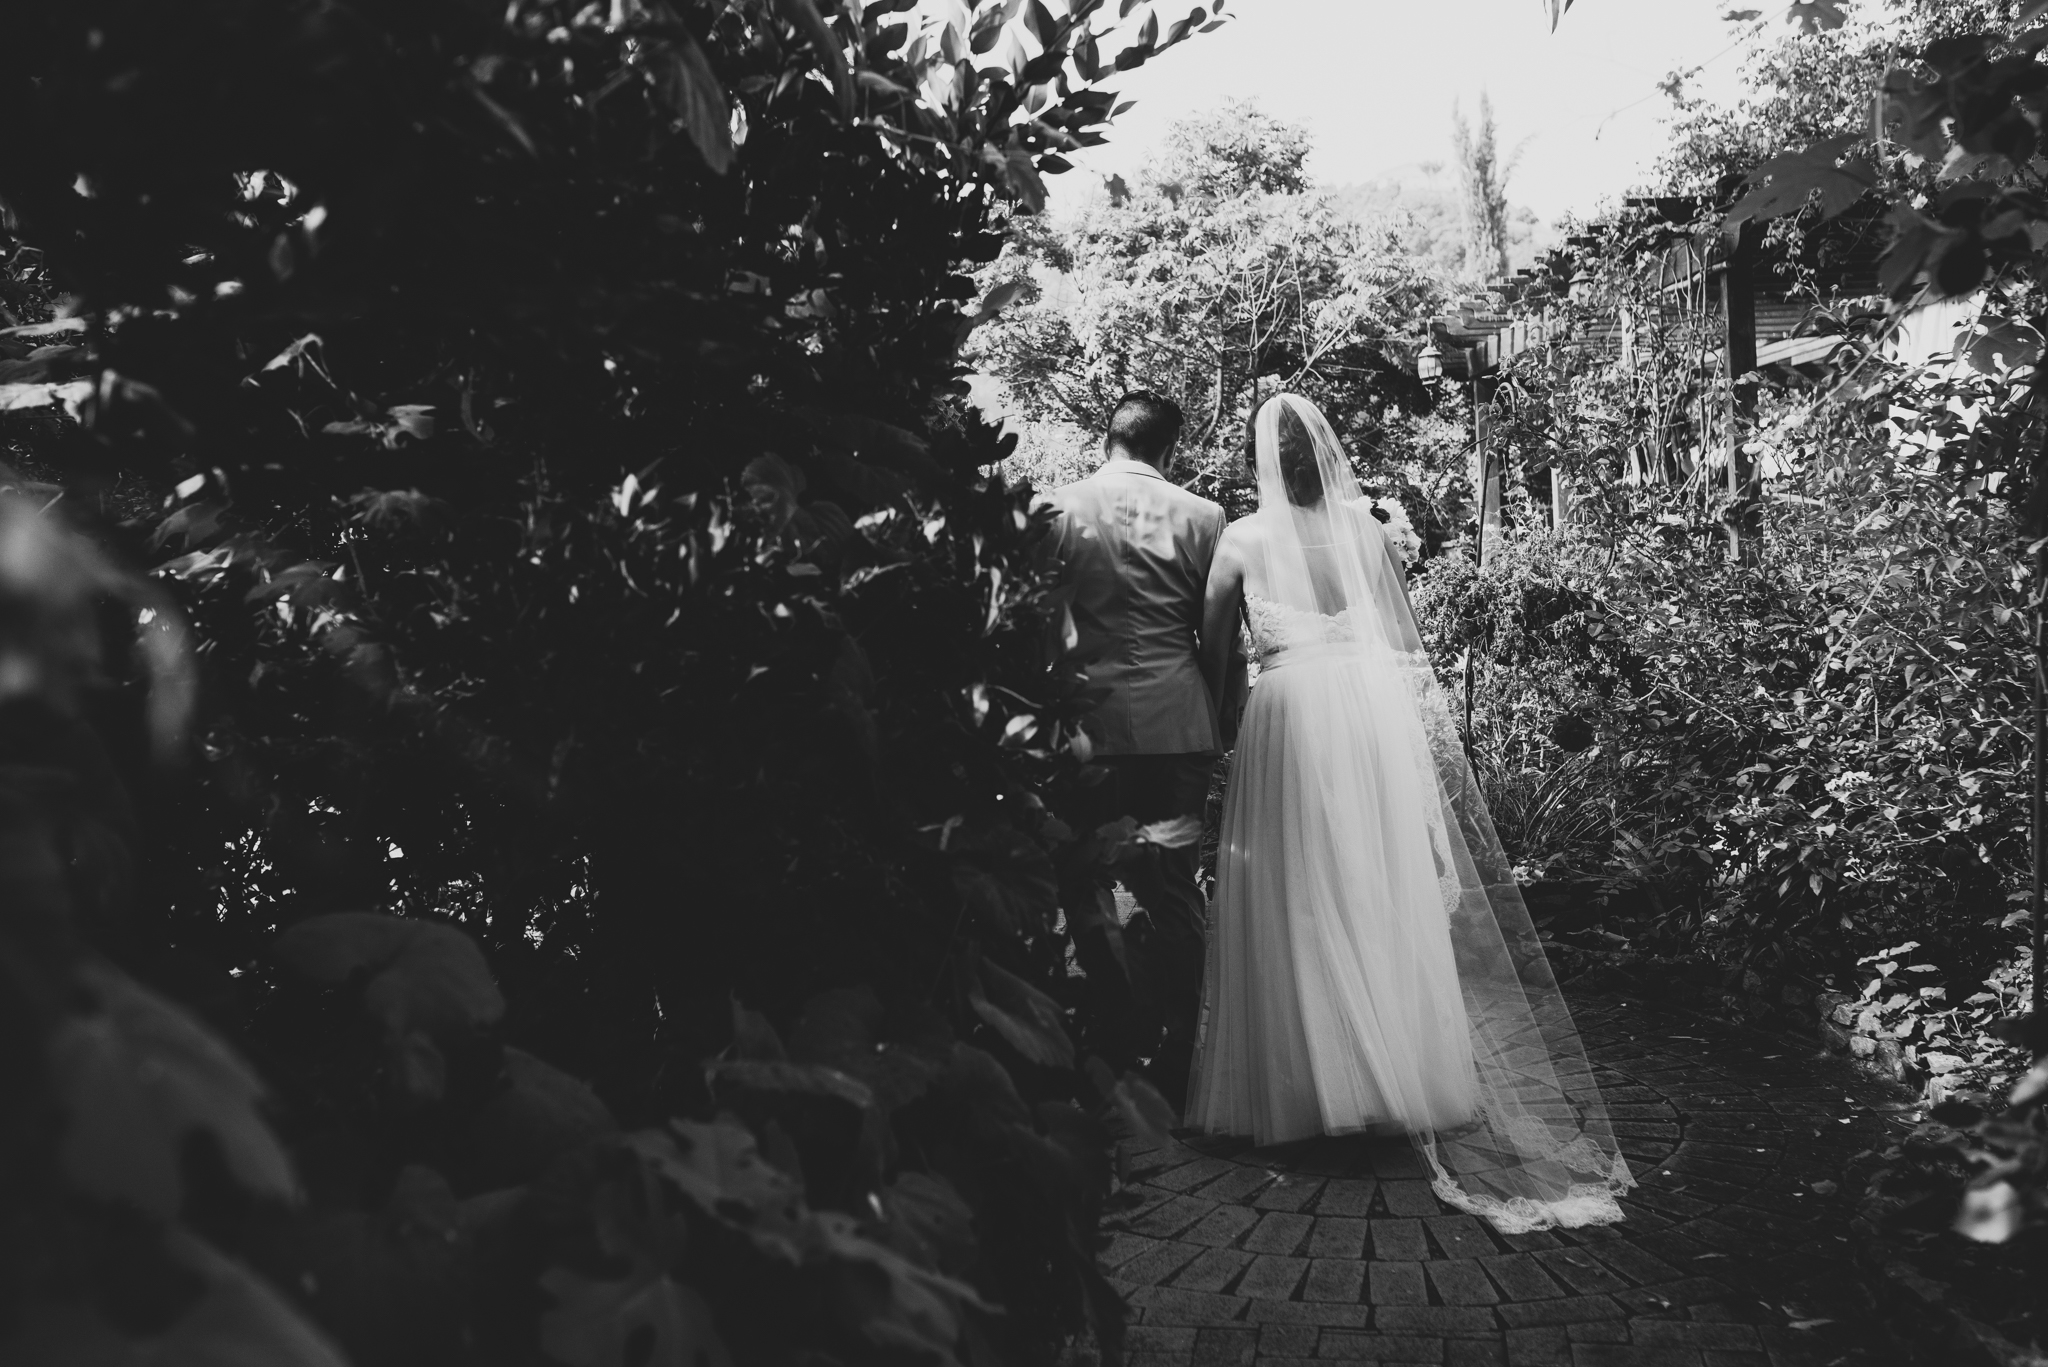 ©Isaiah + Taylor Photography - Brendan + Stefana, Quail Haven Farm Wedding, Vista-78.jpg